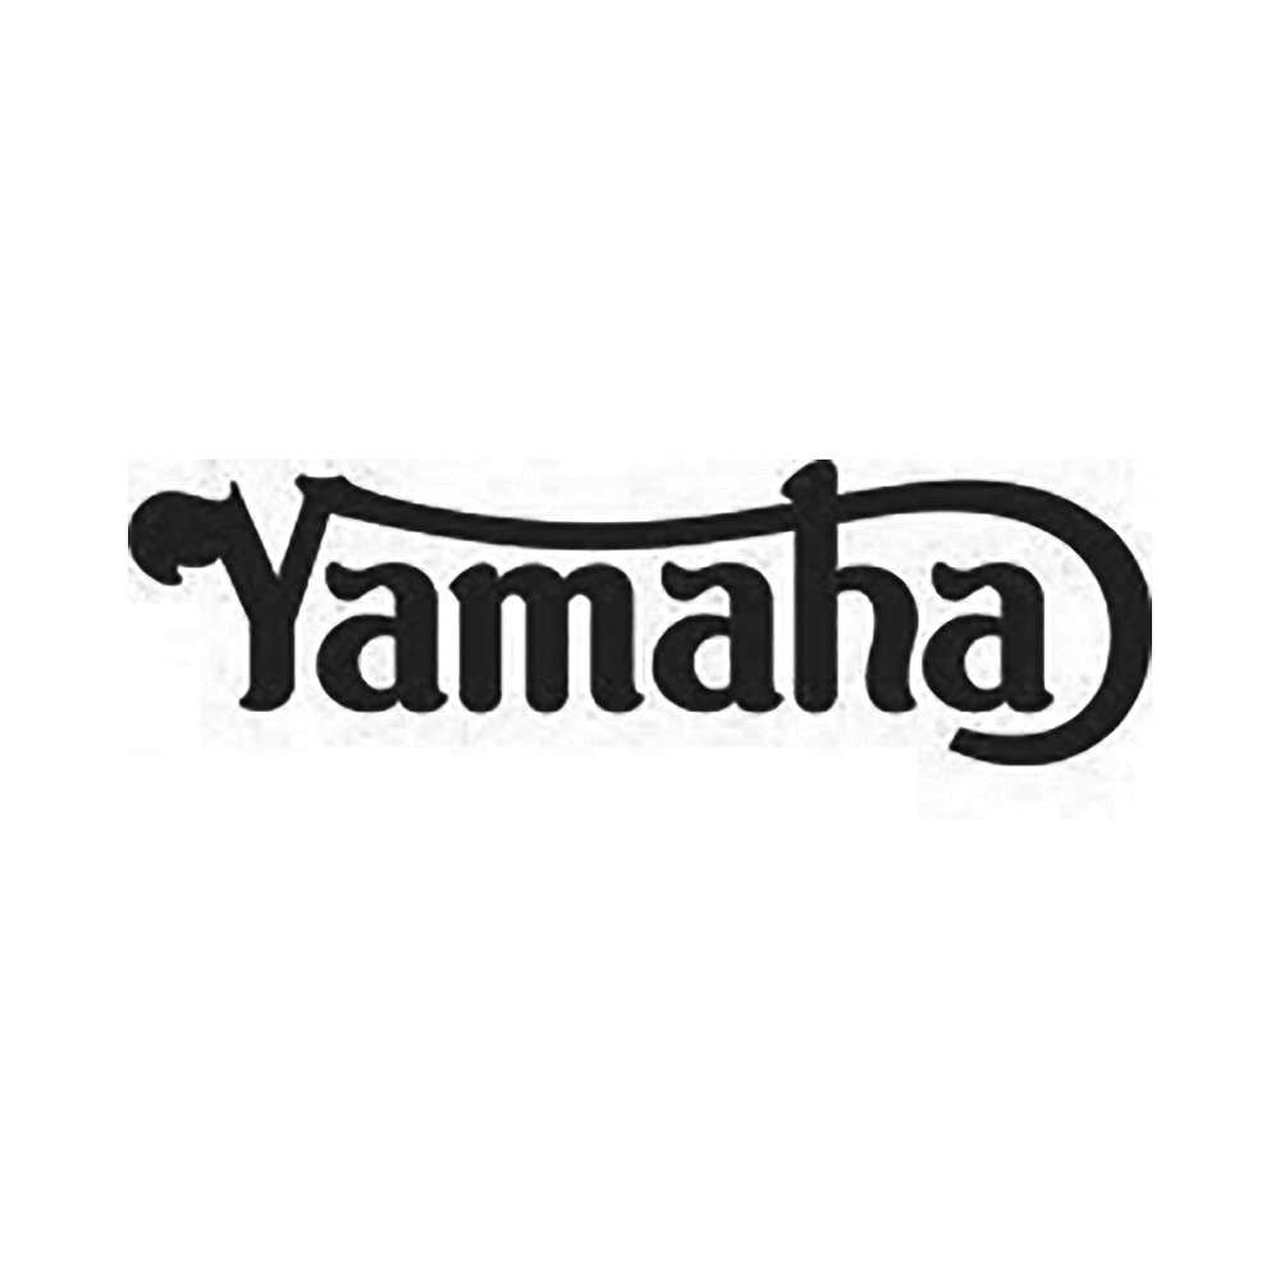 Yamalube Logo - Yamaha Logo Vinyl Decal Graphic